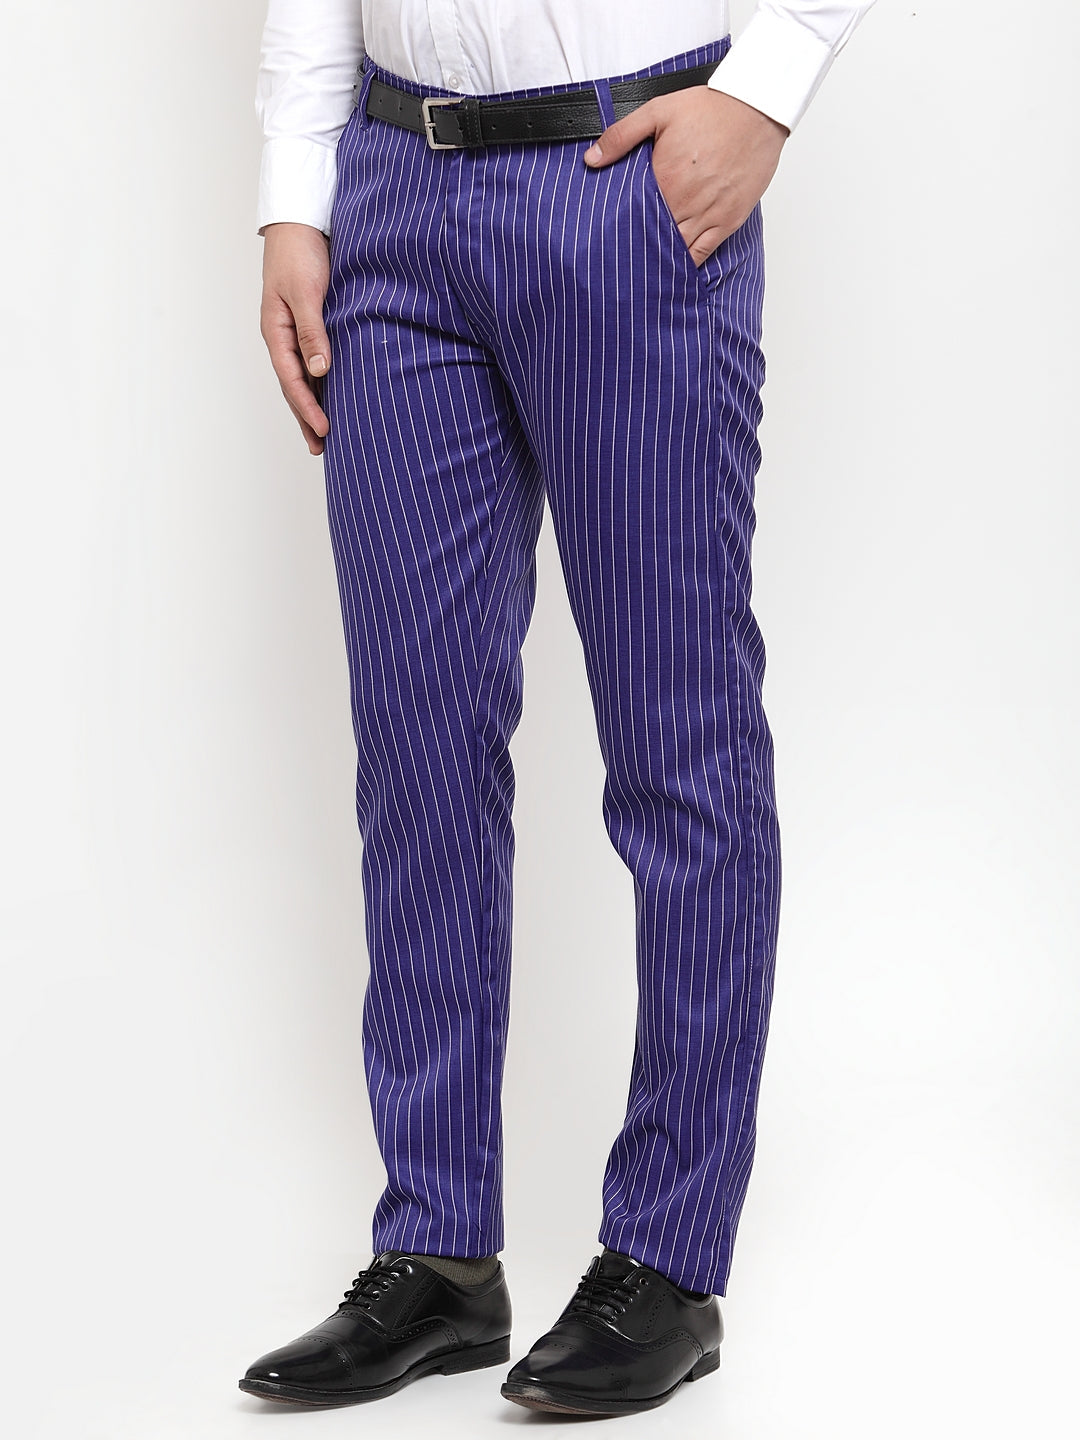 Men's Formal Business Casual Long Trousers Office Slim Fit Striped Skinny  Pants | eBay